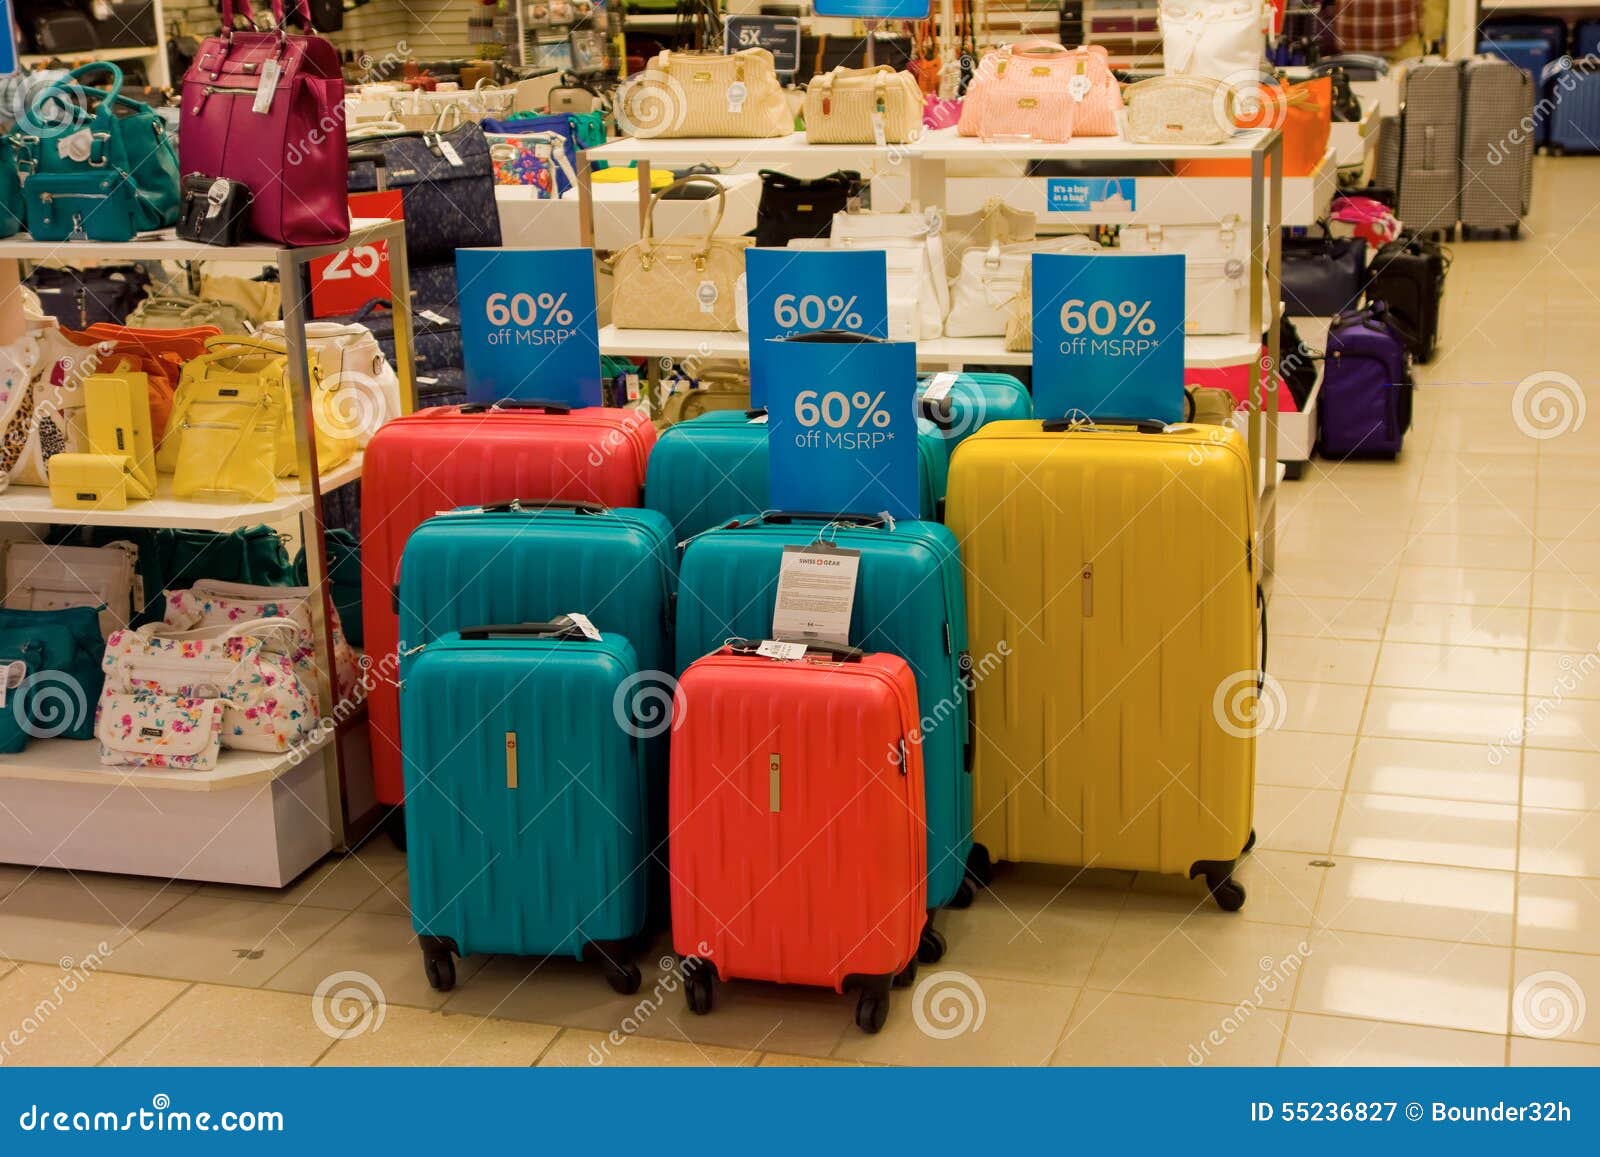 Cheap Travel Bags For Sale Gordmans Store | SEMA Data Co-op